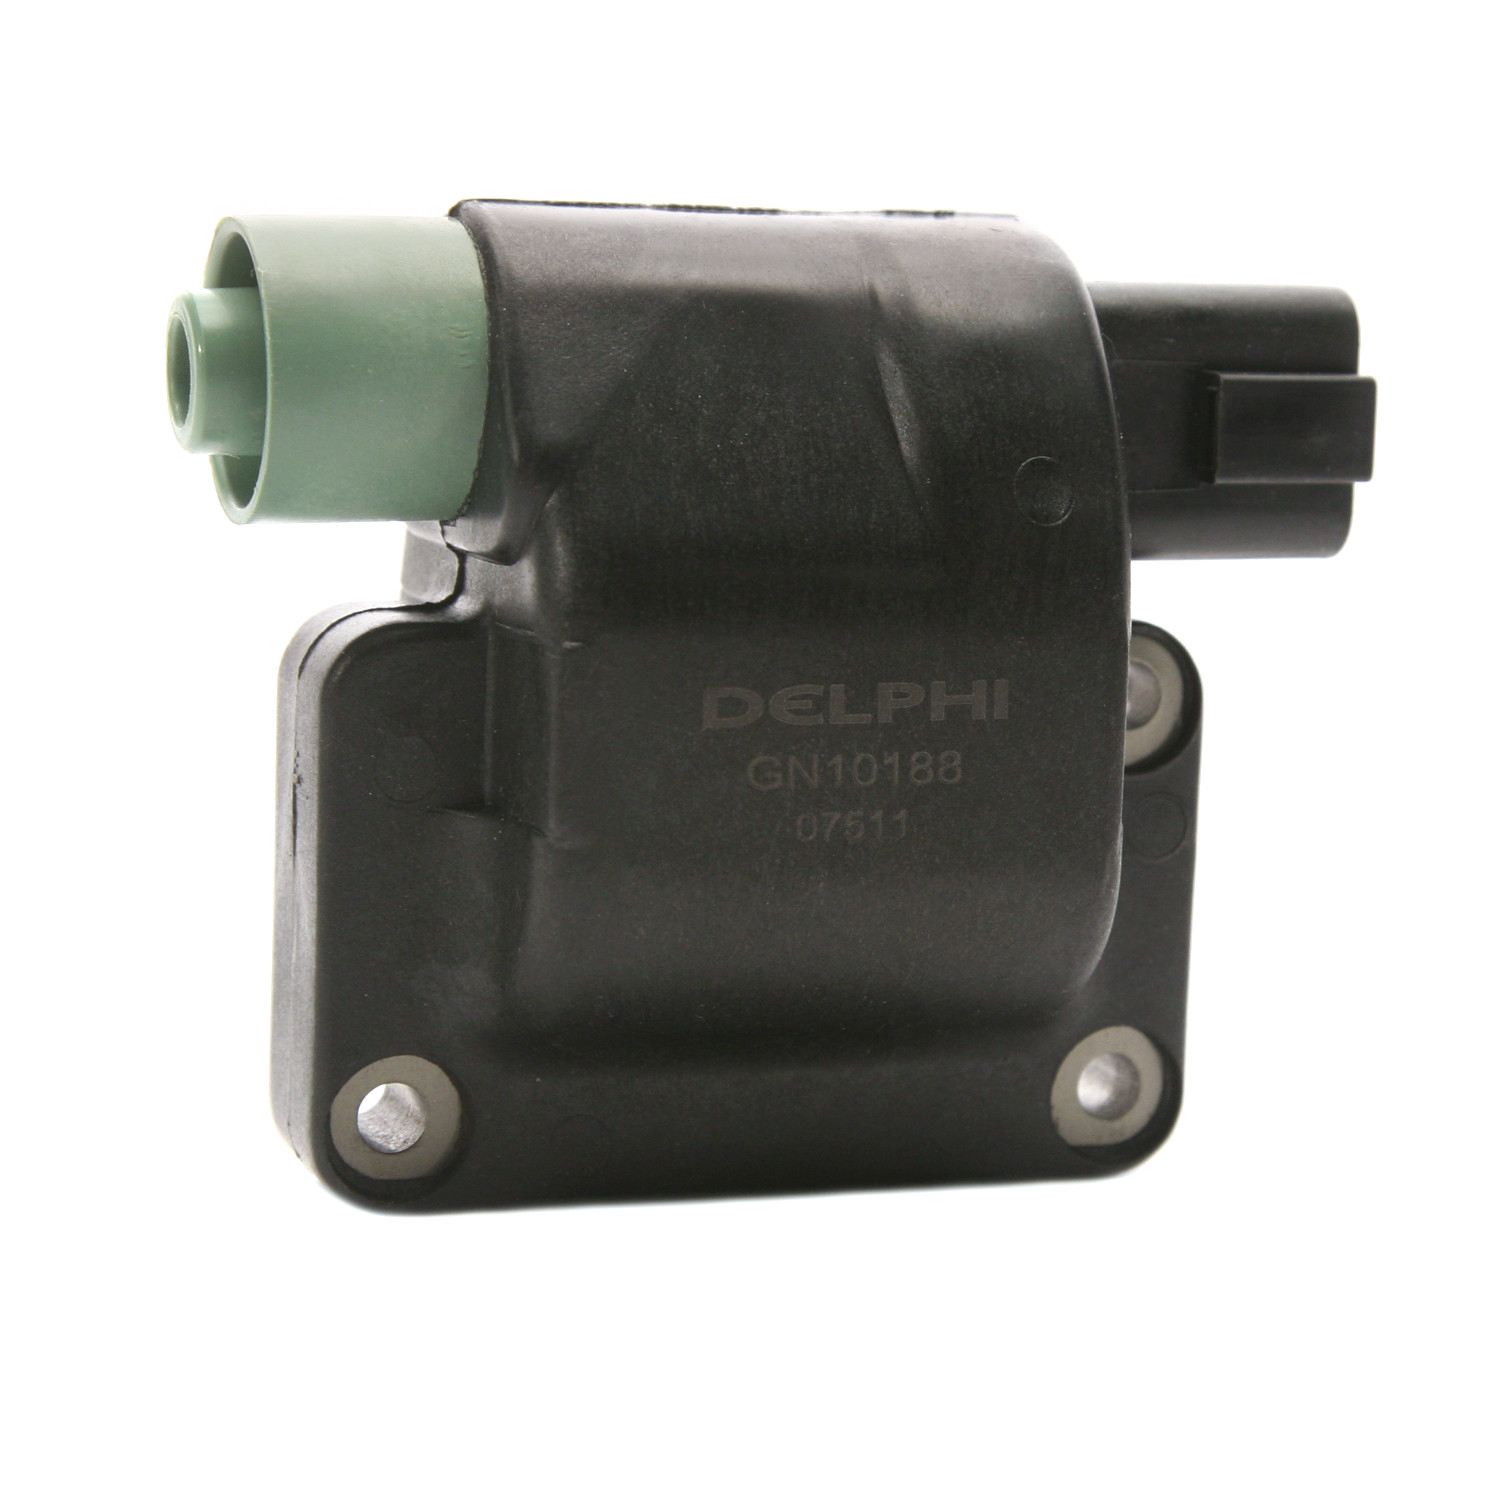 DELPHI - Ignition Coil - DPH GN10188